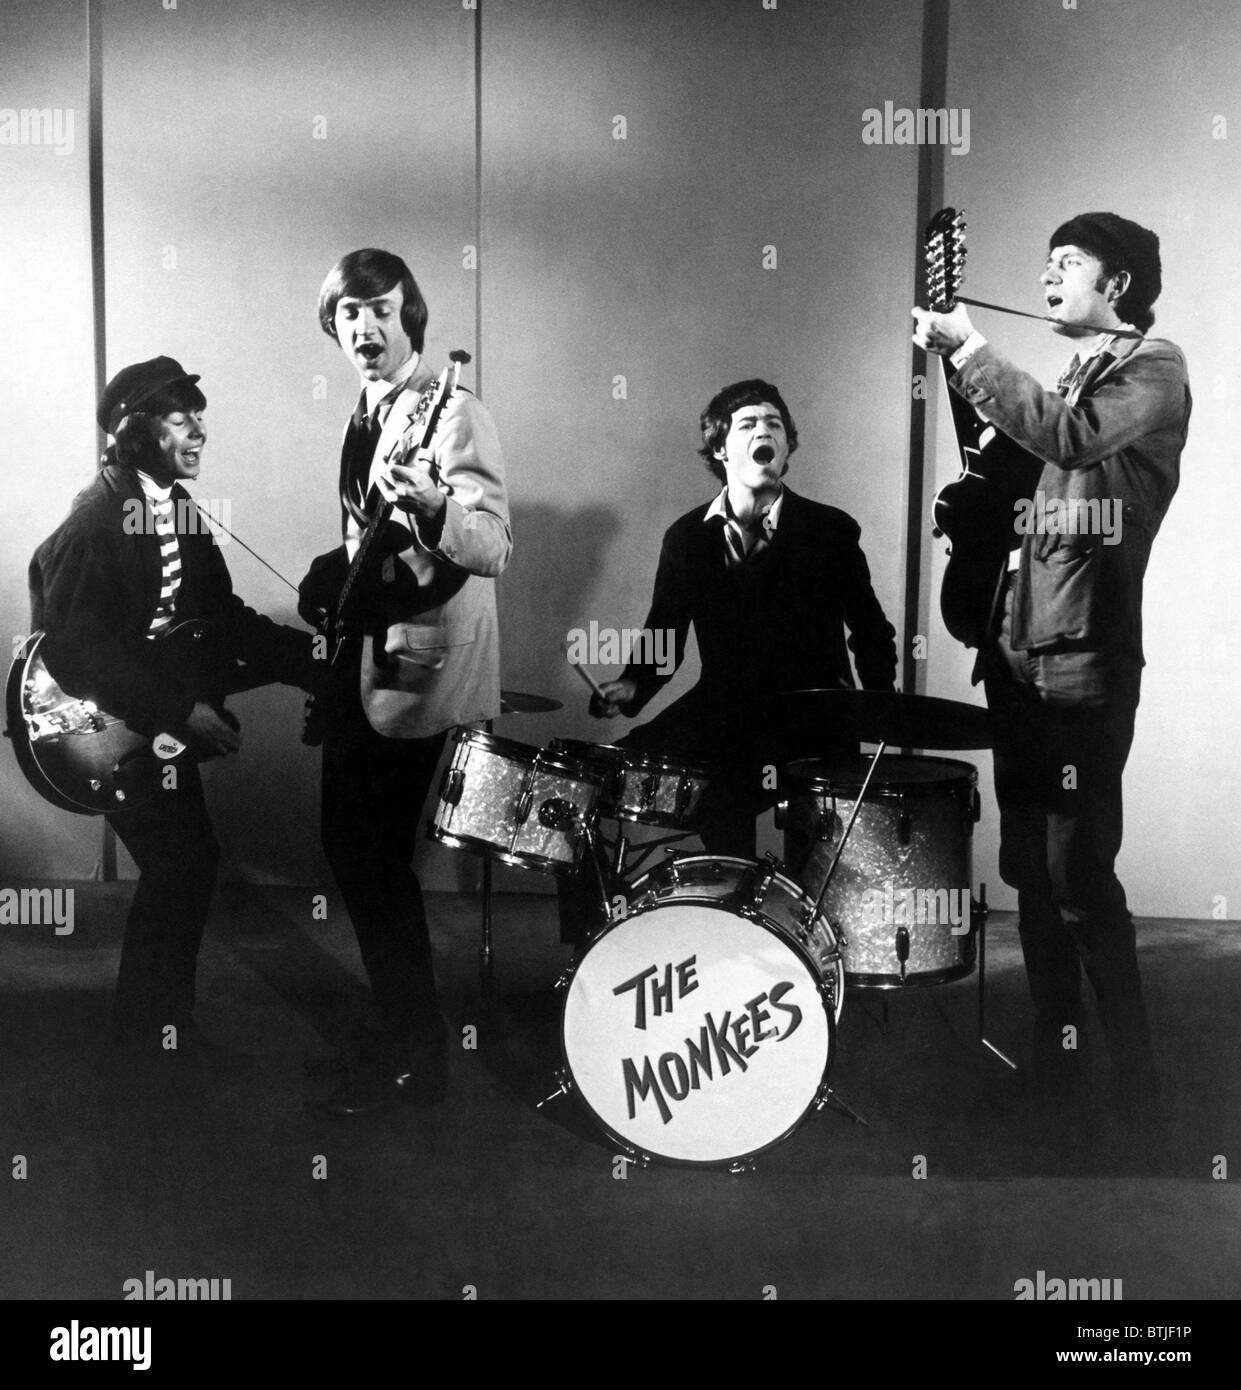 The Monkees, l-r: Davy Jones, Peter Tork, Micky Dolenz, Michael Nesmith, c. 1965. Stock Photo